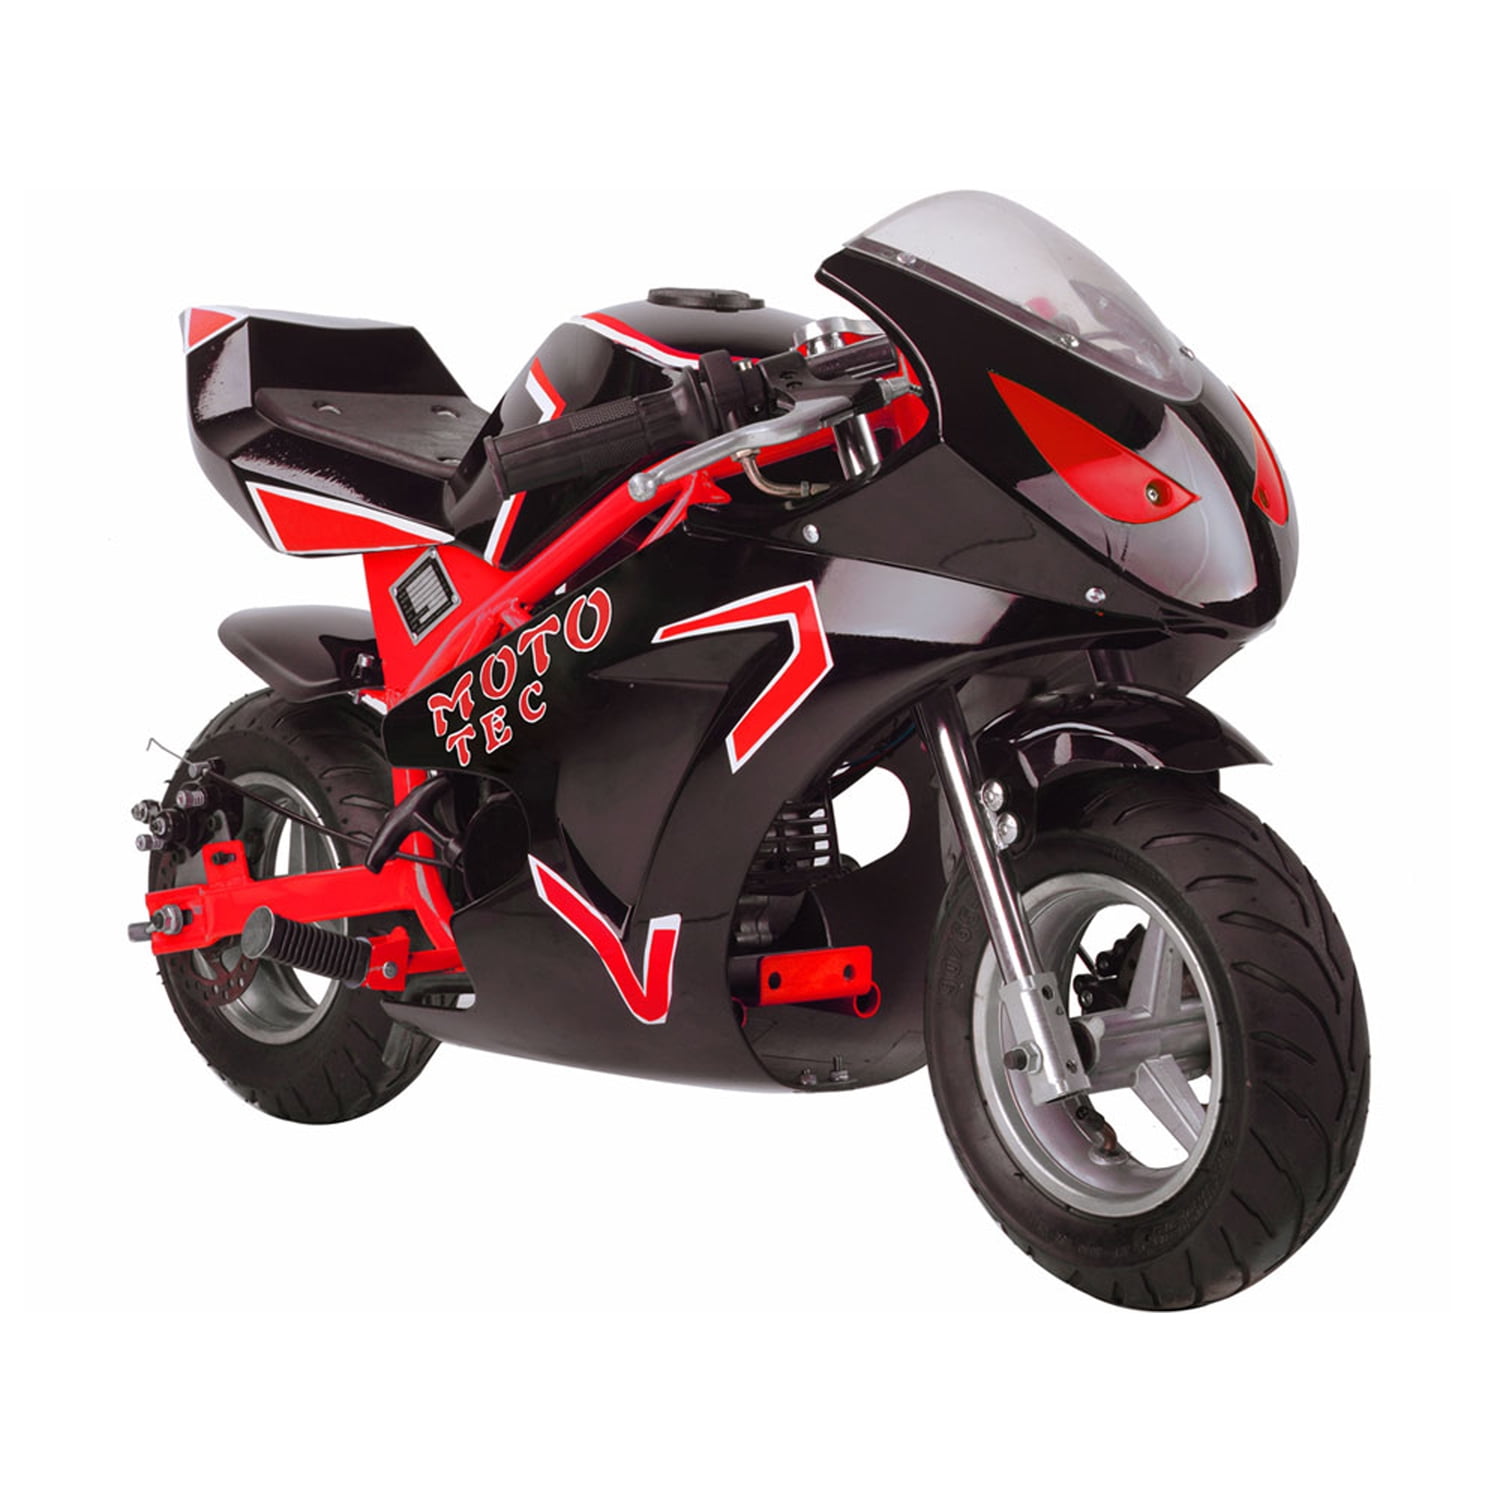 MotoTec 49cc 2-Stroke Gas Powered Pocket Bike Mini Motorcycle GT Red